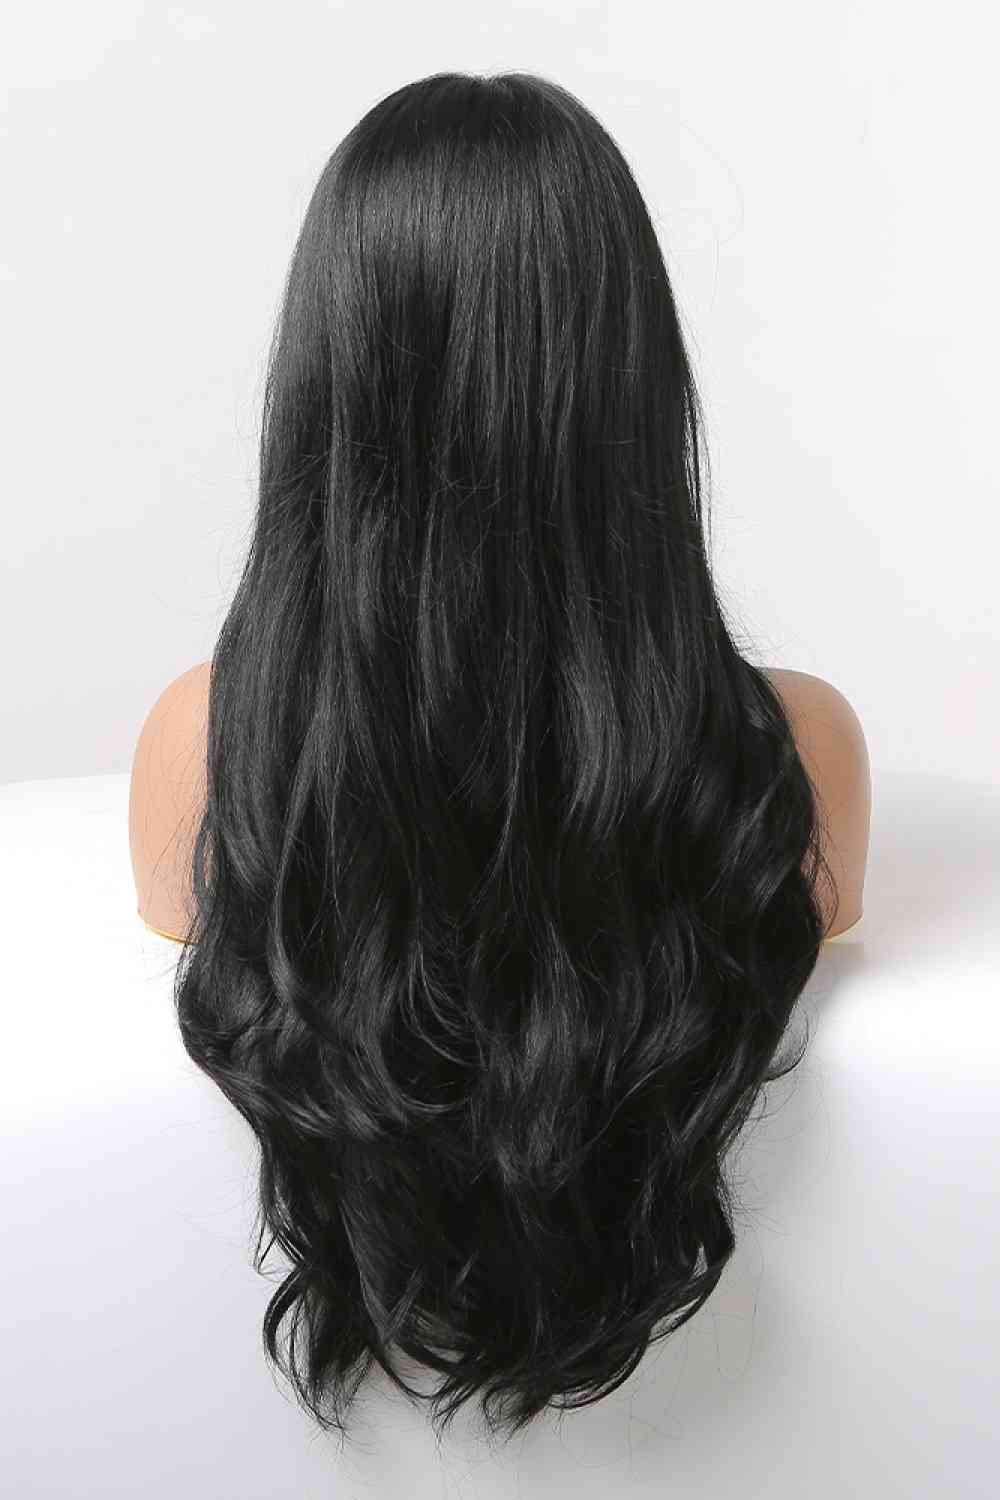 TEEK - Black 13*2" Lace Front Synthetic Wavy 24" Wig HAIR TEEK Trend   